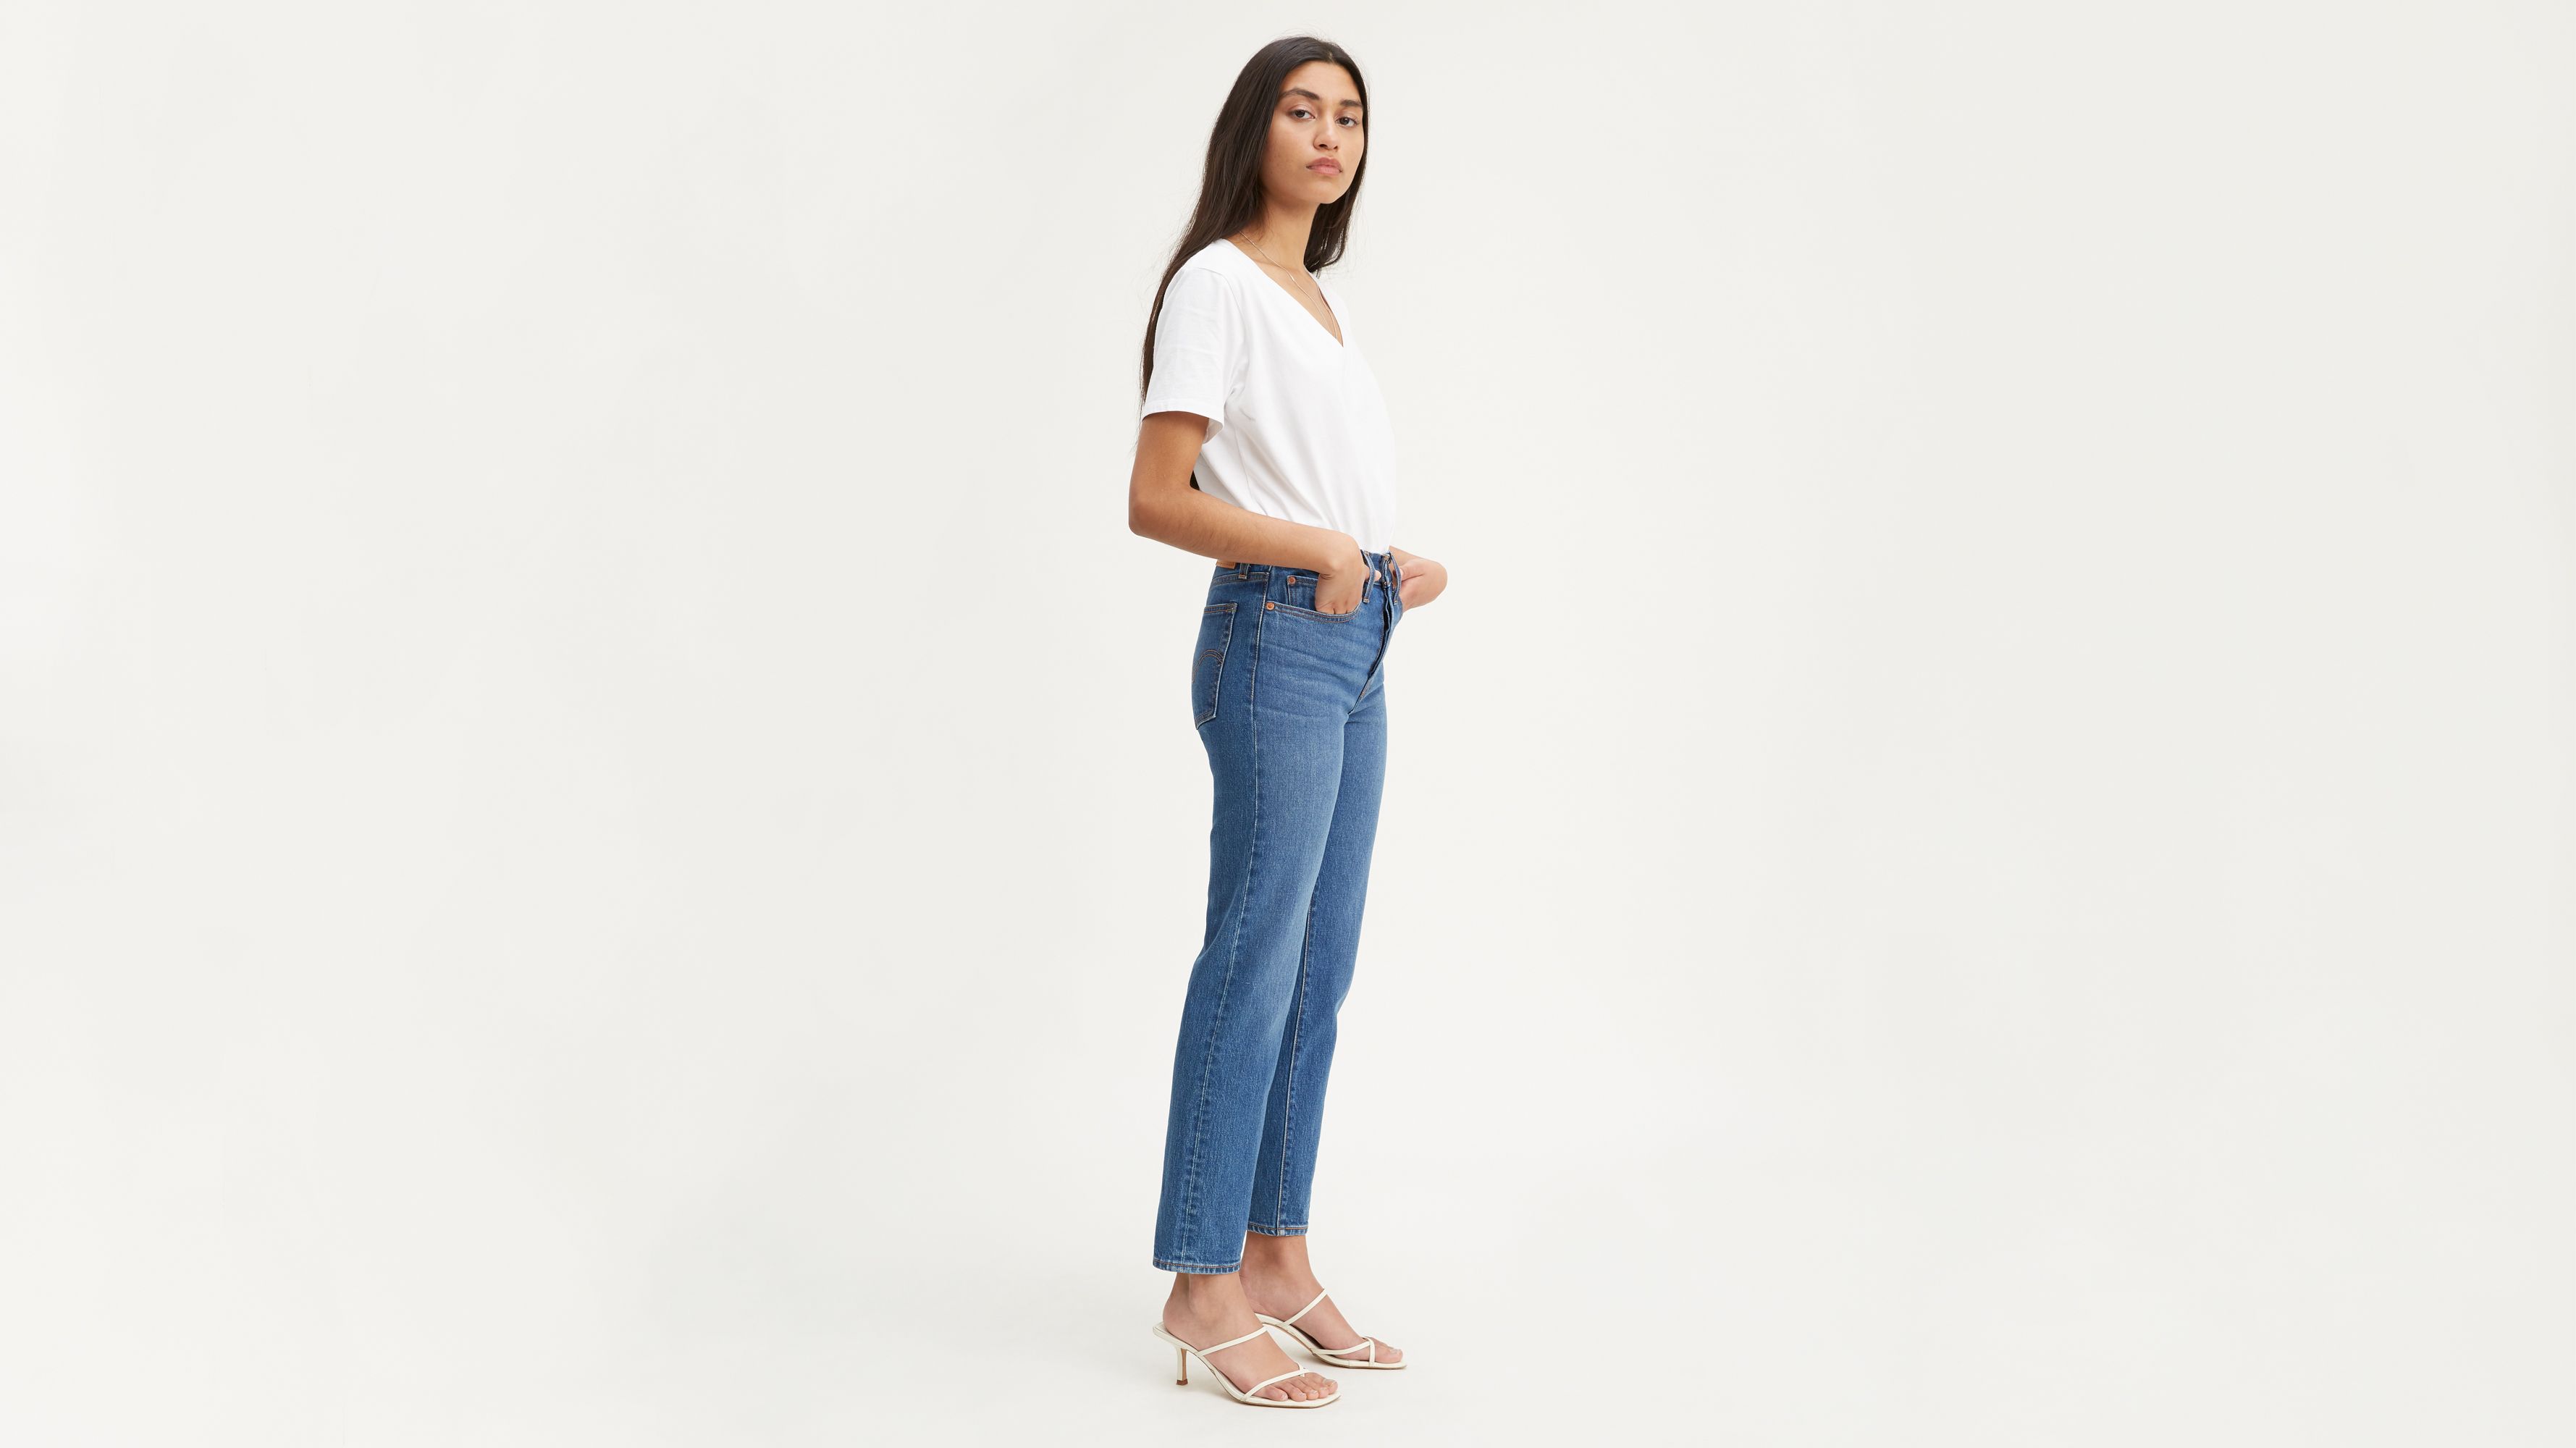 Wedgie Fit Ankle Women's Jeans - Medium Wash | Levi's® US